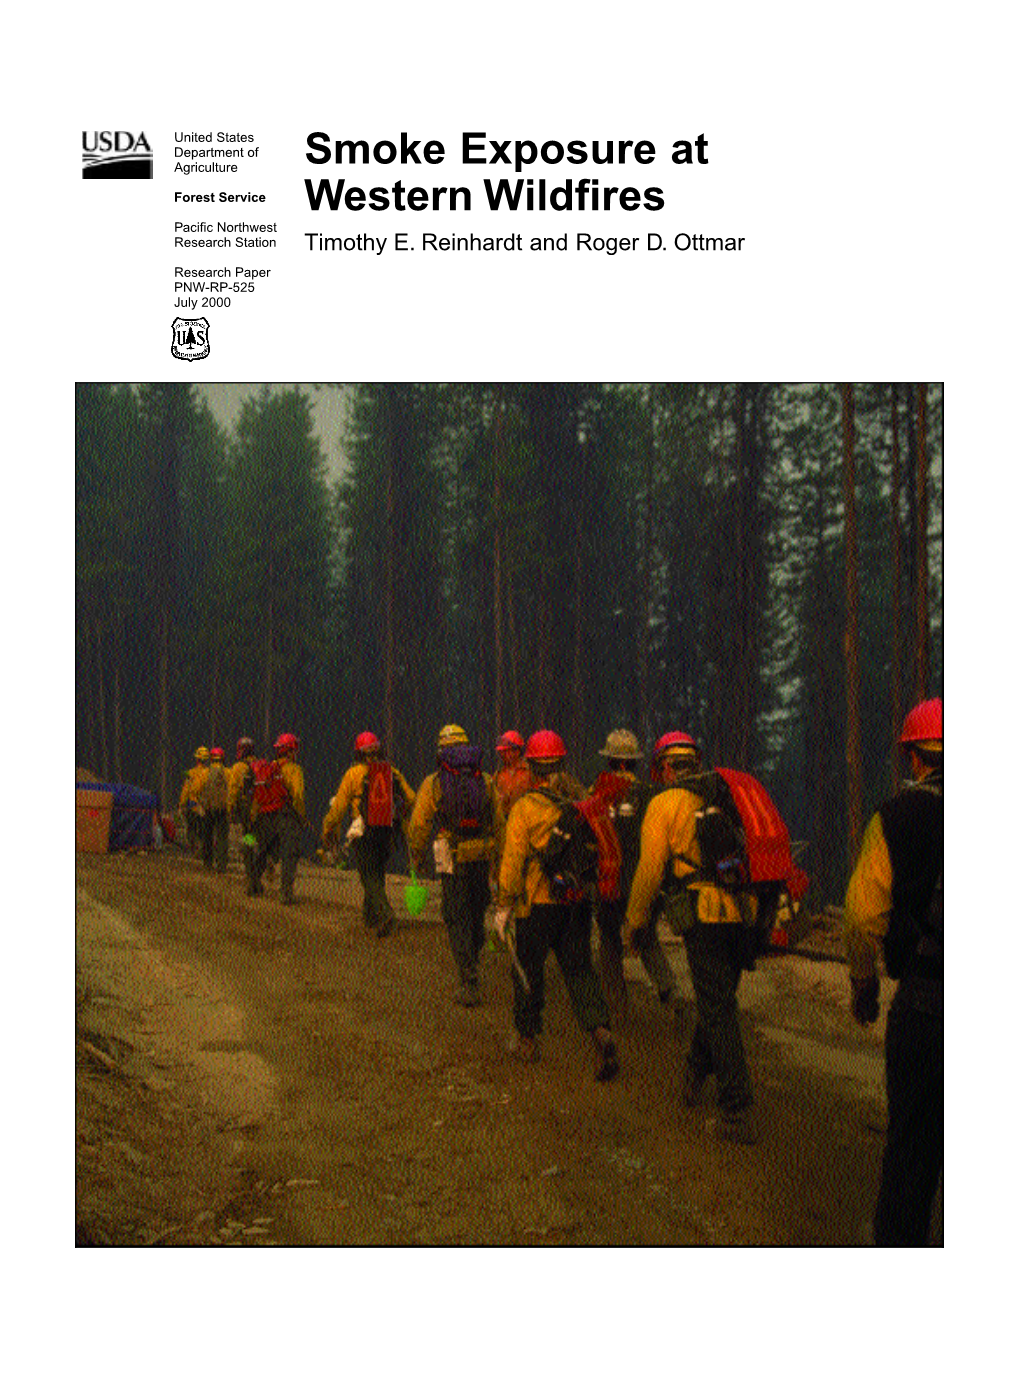 Smoke Exposure at Western Wildfires